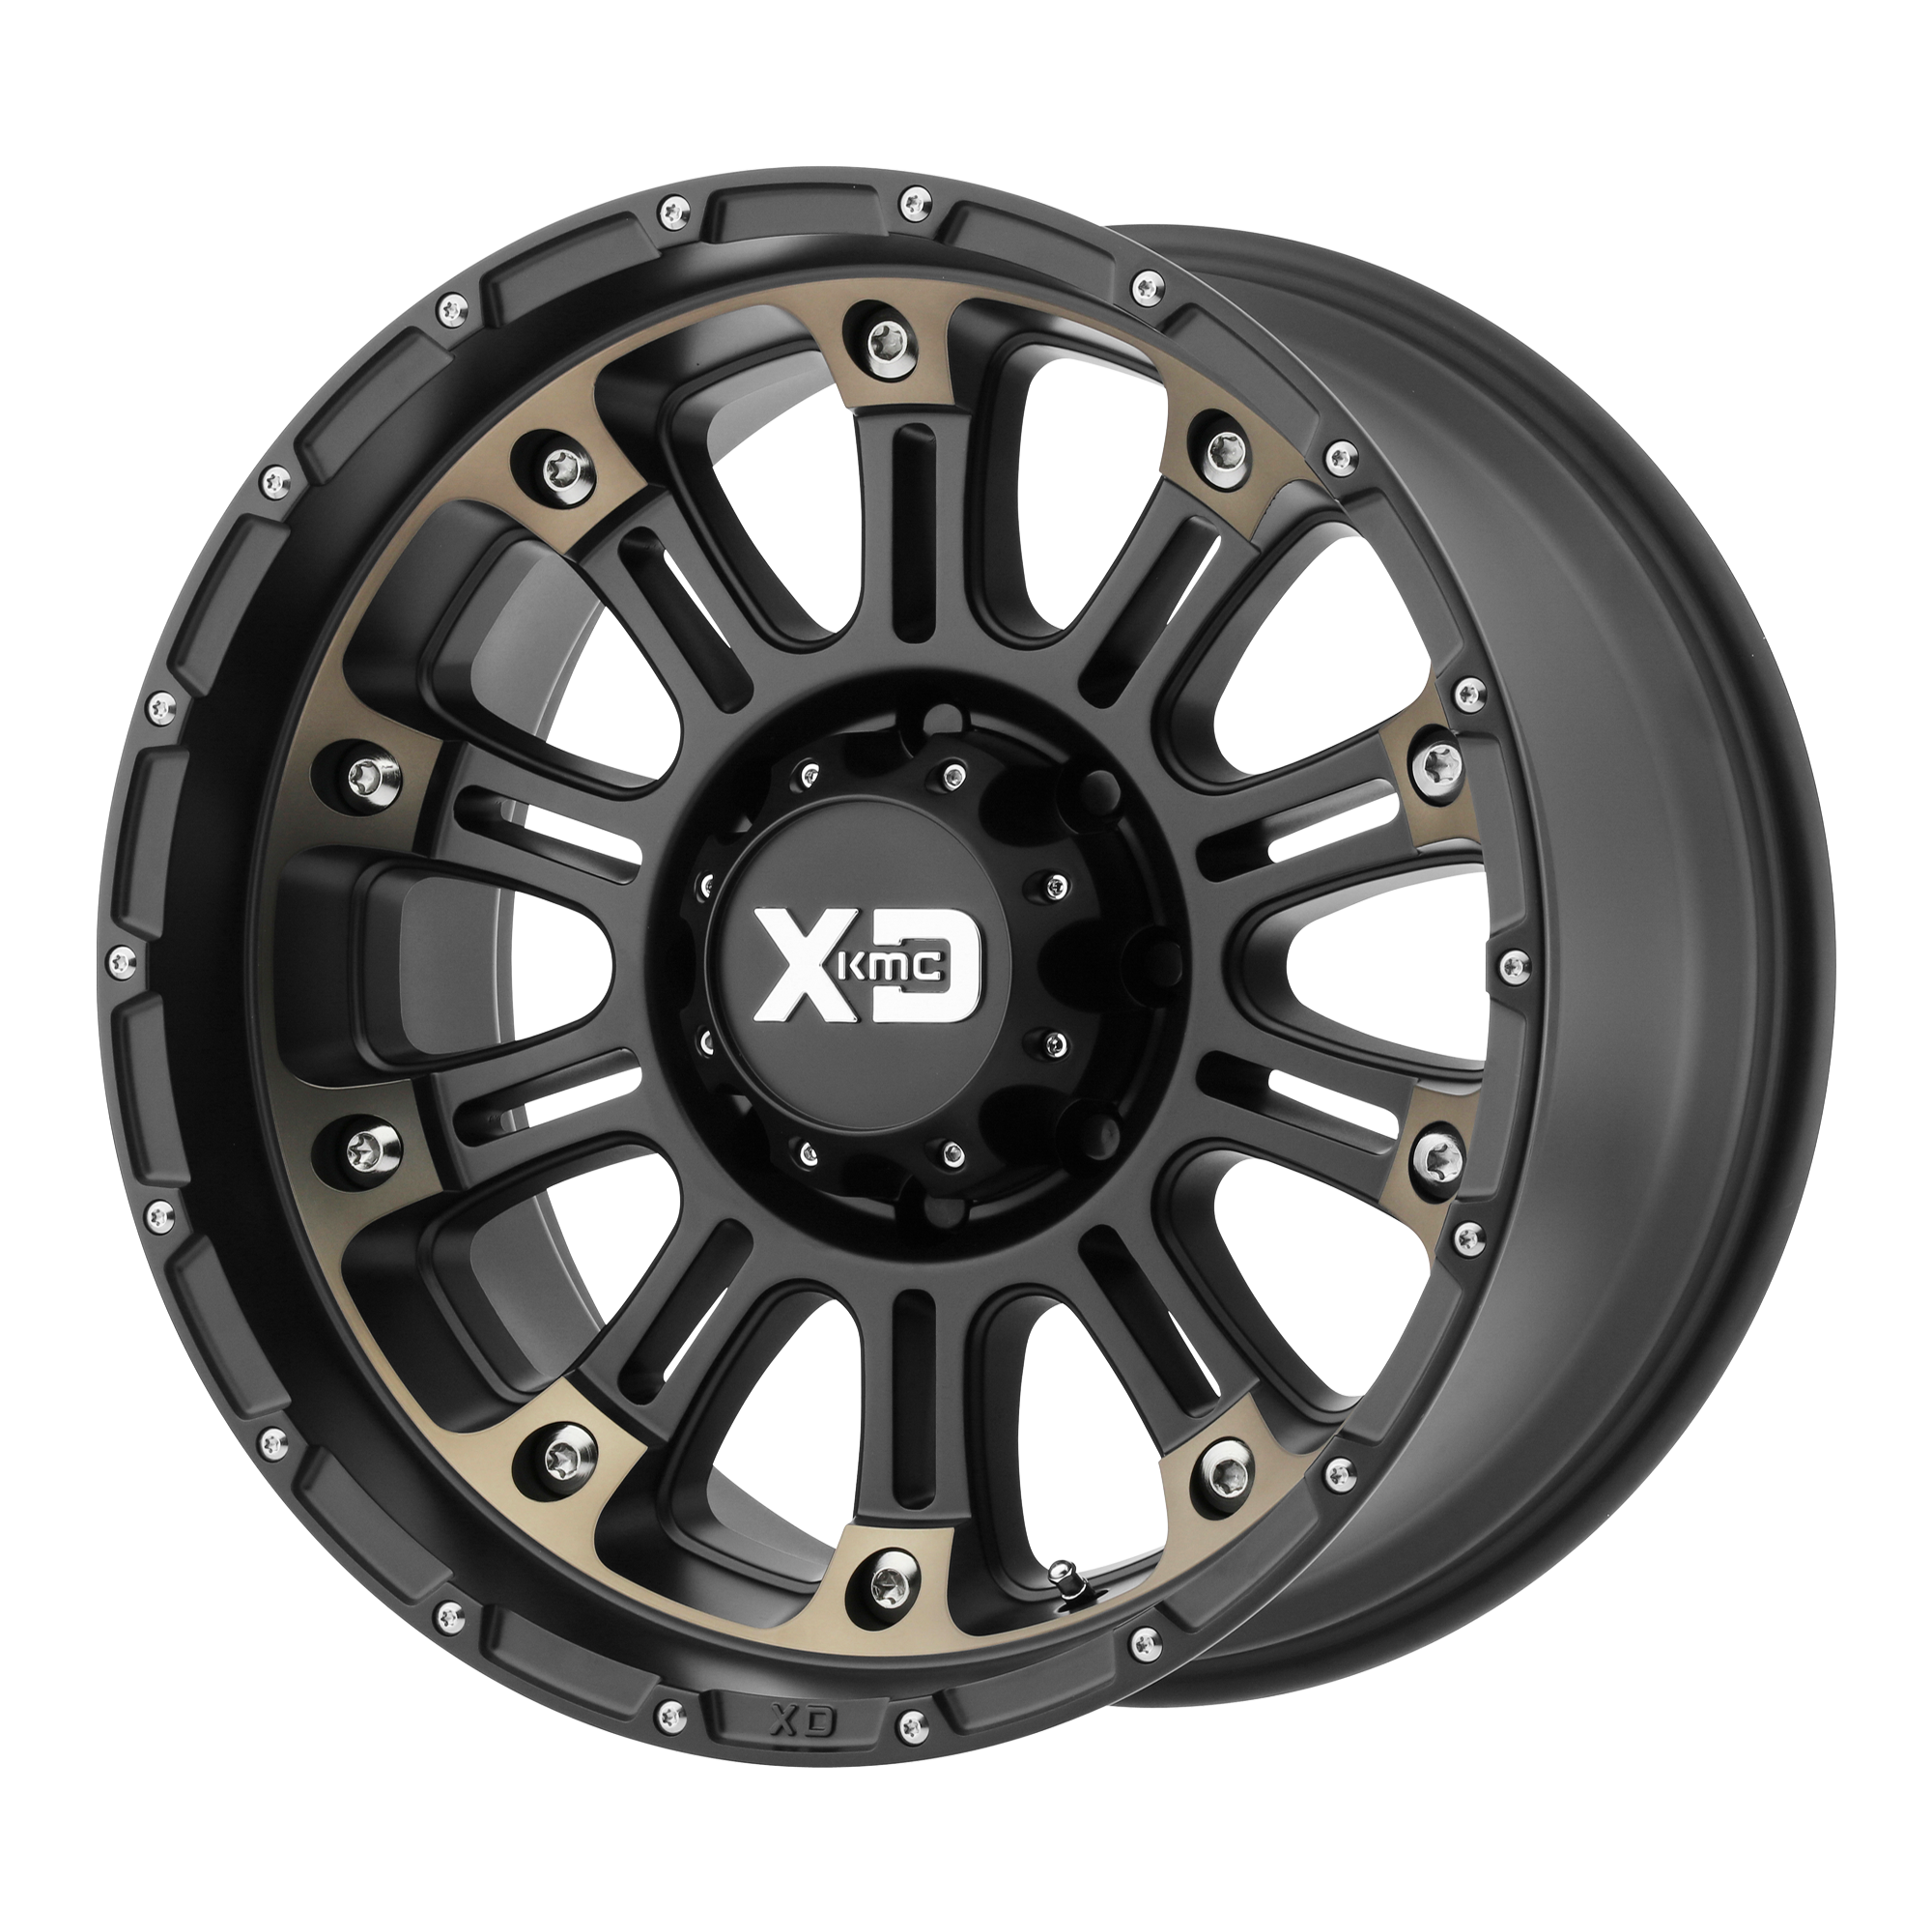 HOSS II 17x9 8x165.10 SATIN BLACK MACH W/ DARK TINT (18 mm) - Tires and Engine Performance